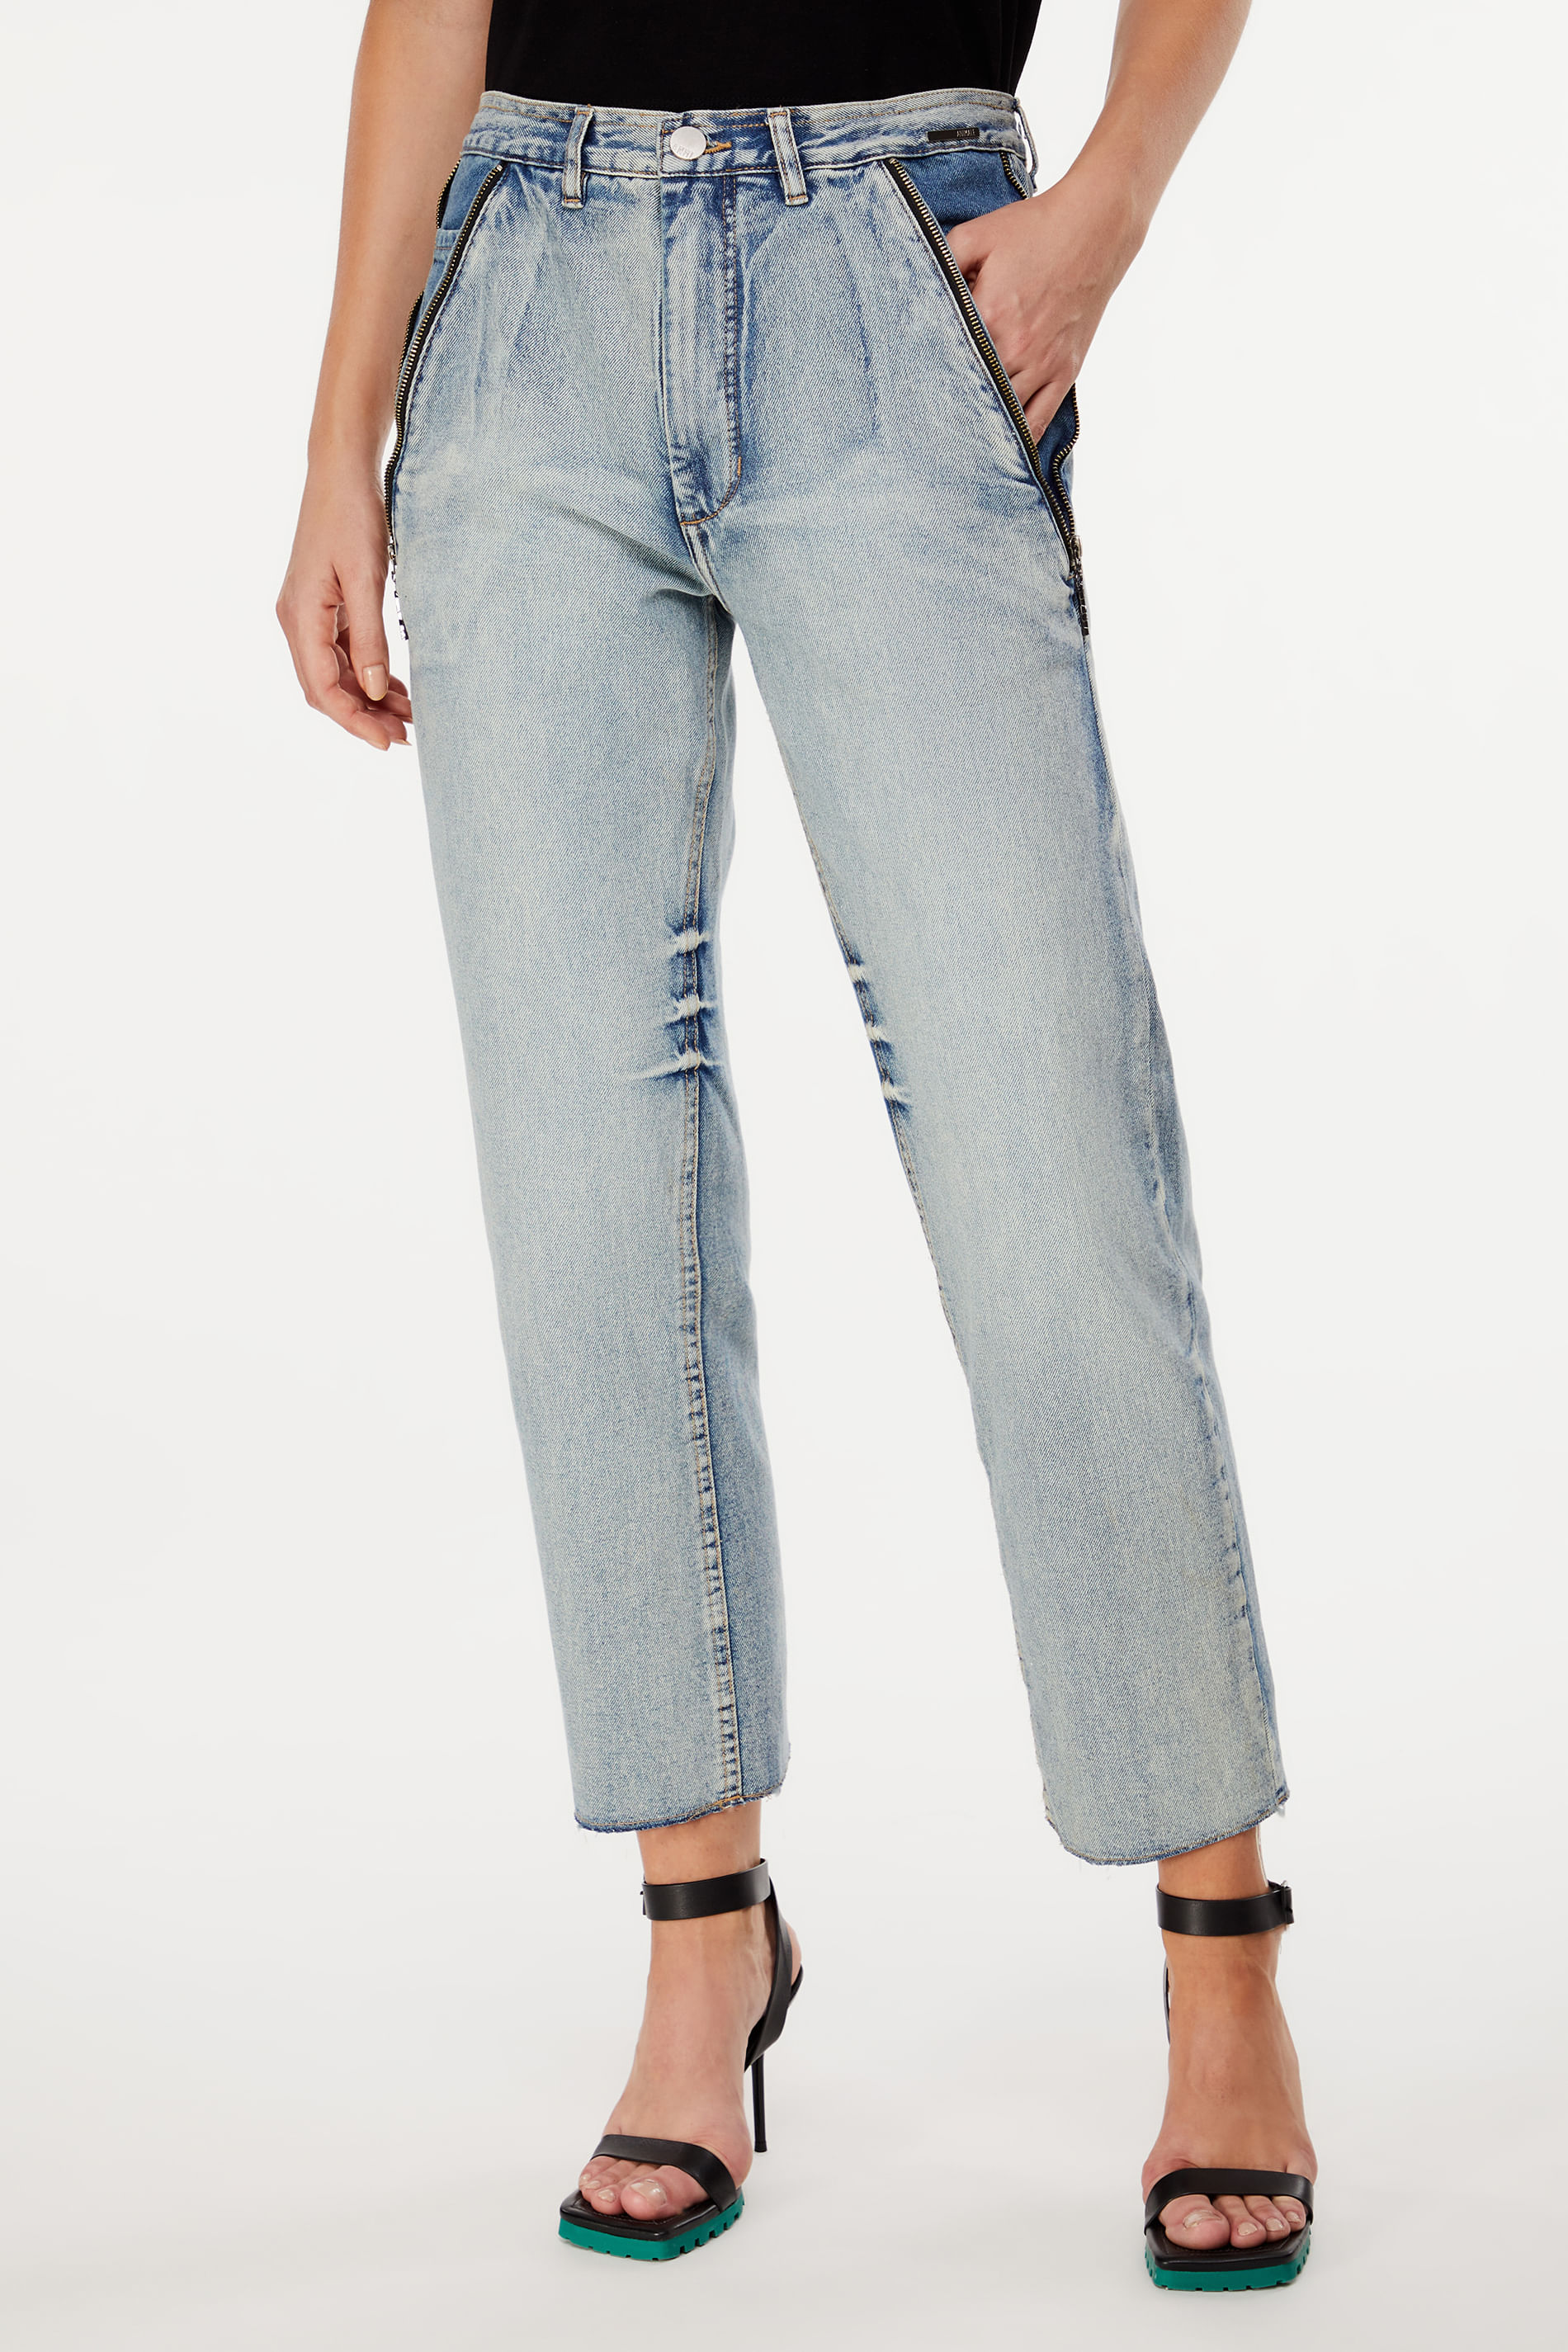 Calça J Brand Jeans Zíper Lateral Tam. 26 USA – Peguei Bode